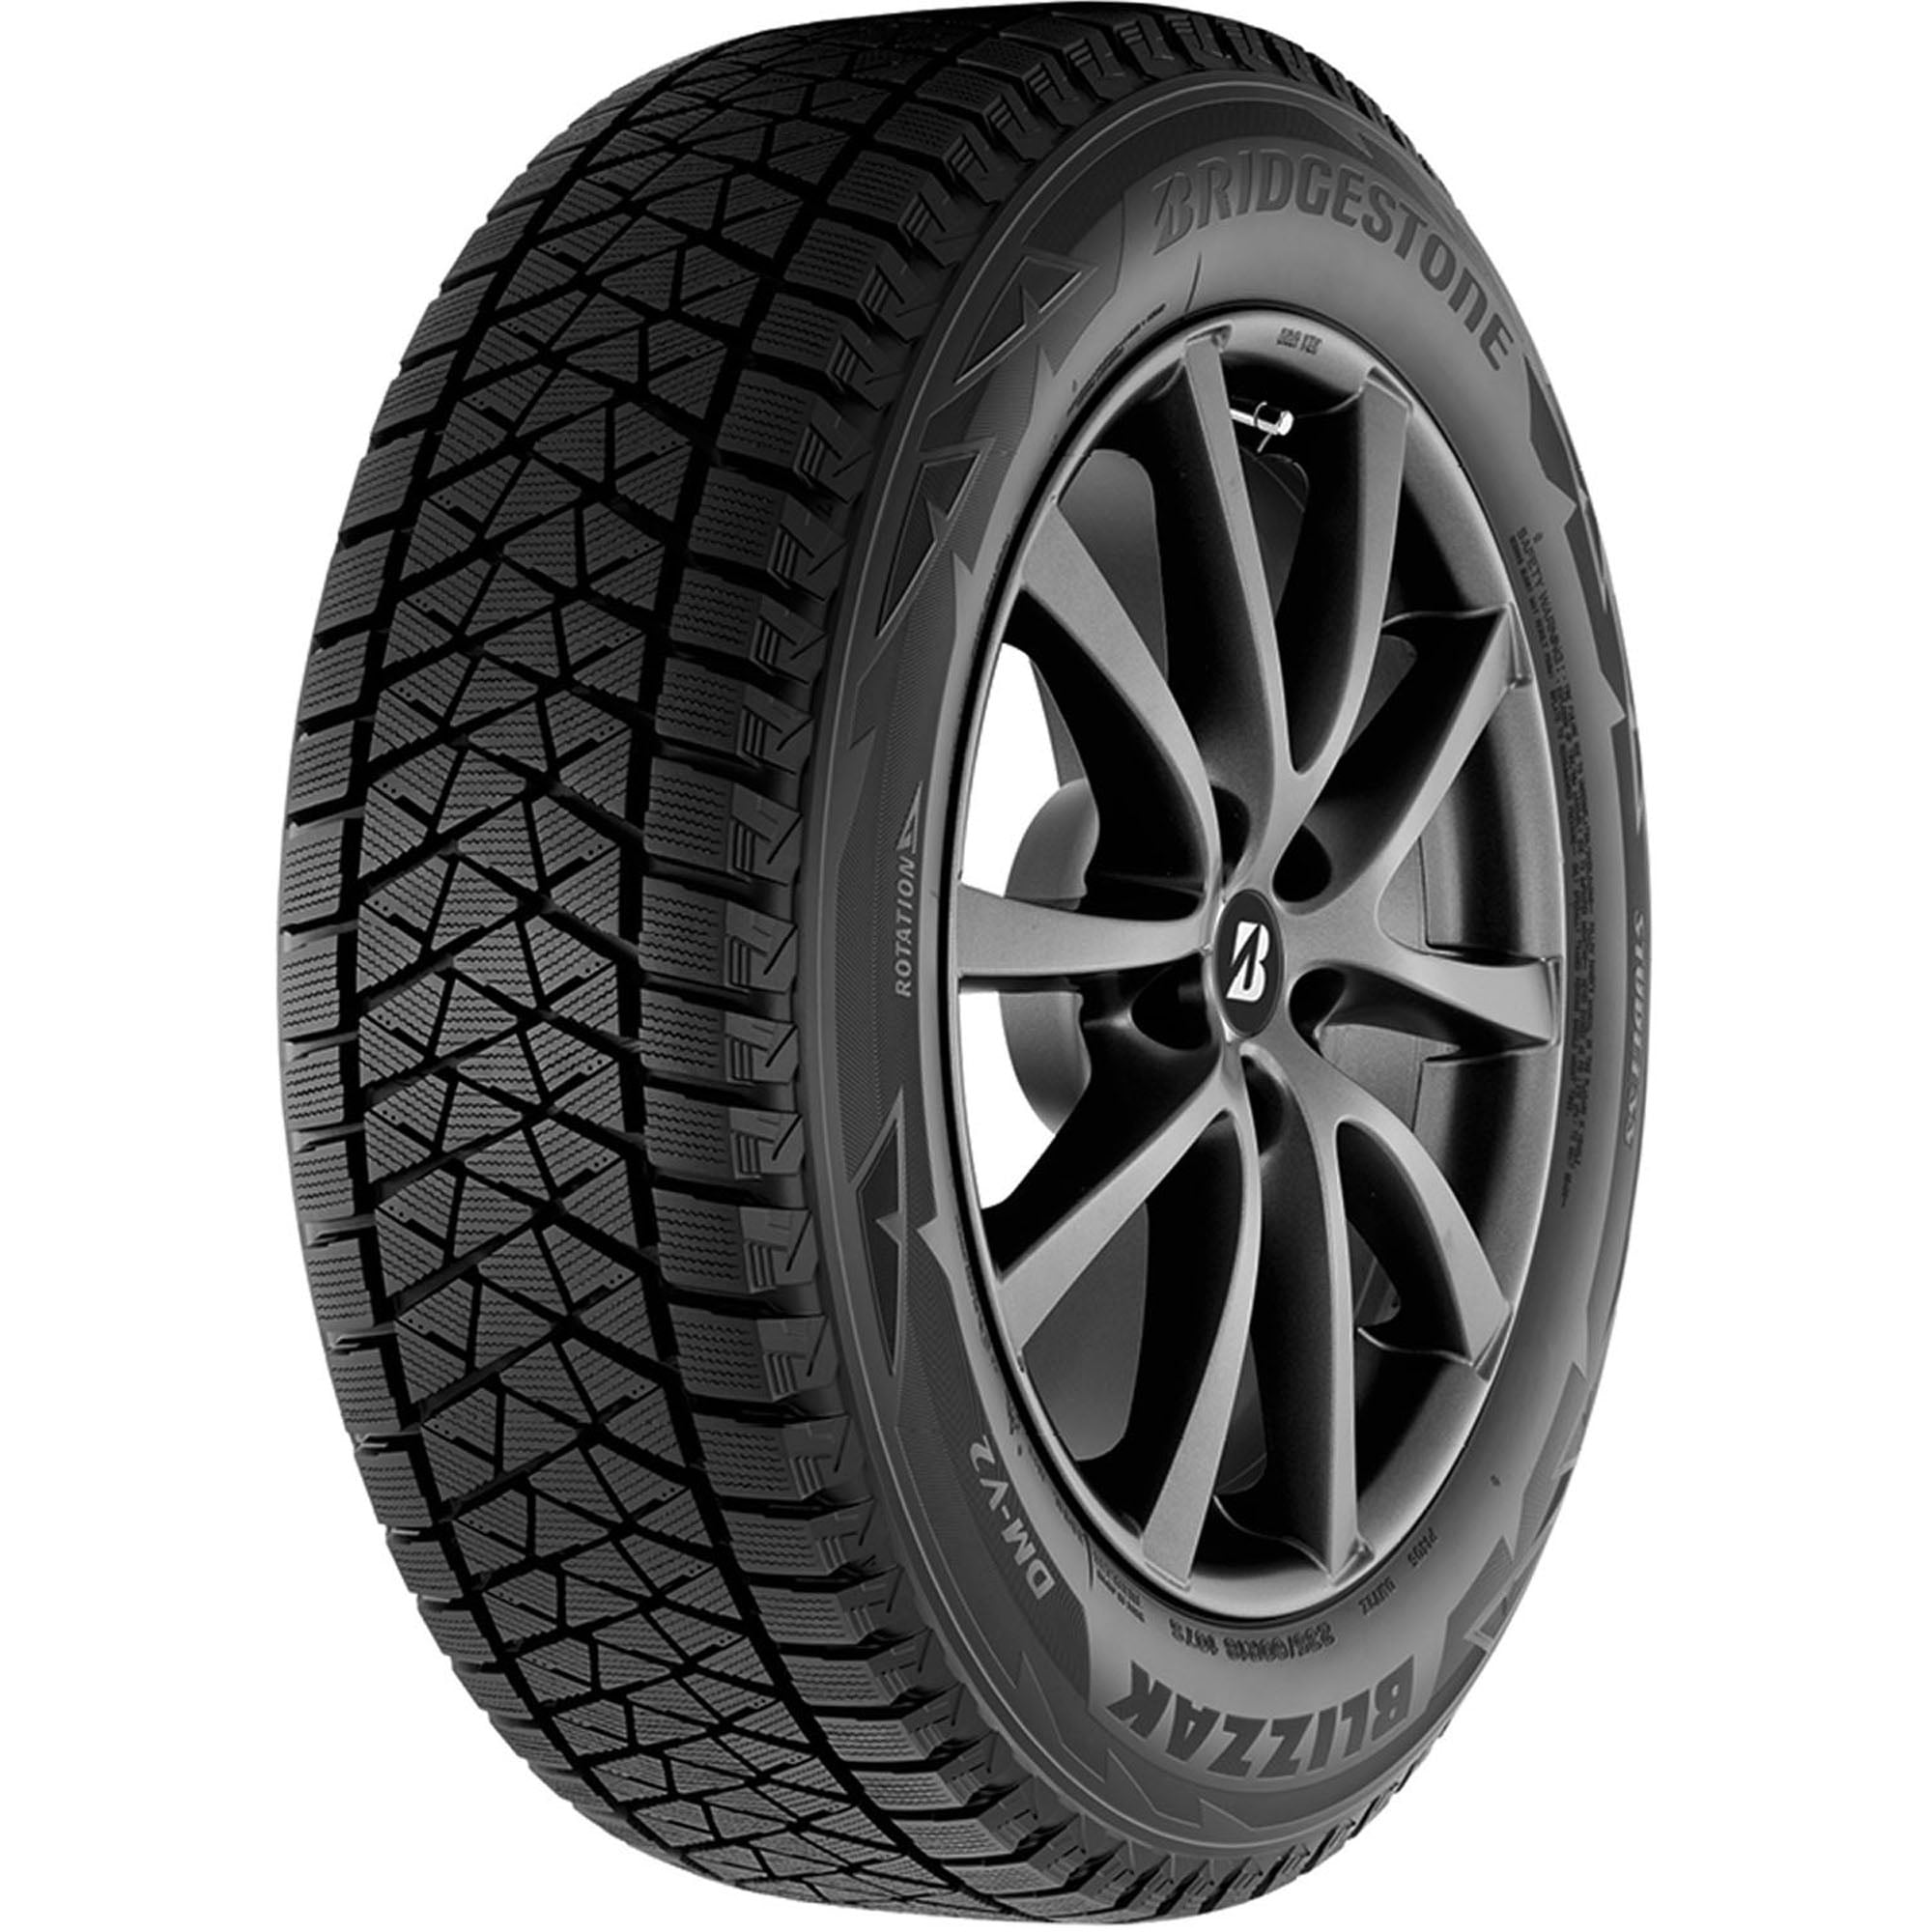 Bridgestone Blizzak DM-V2 235/65R17 Truck Tire XL 108S Light Winter